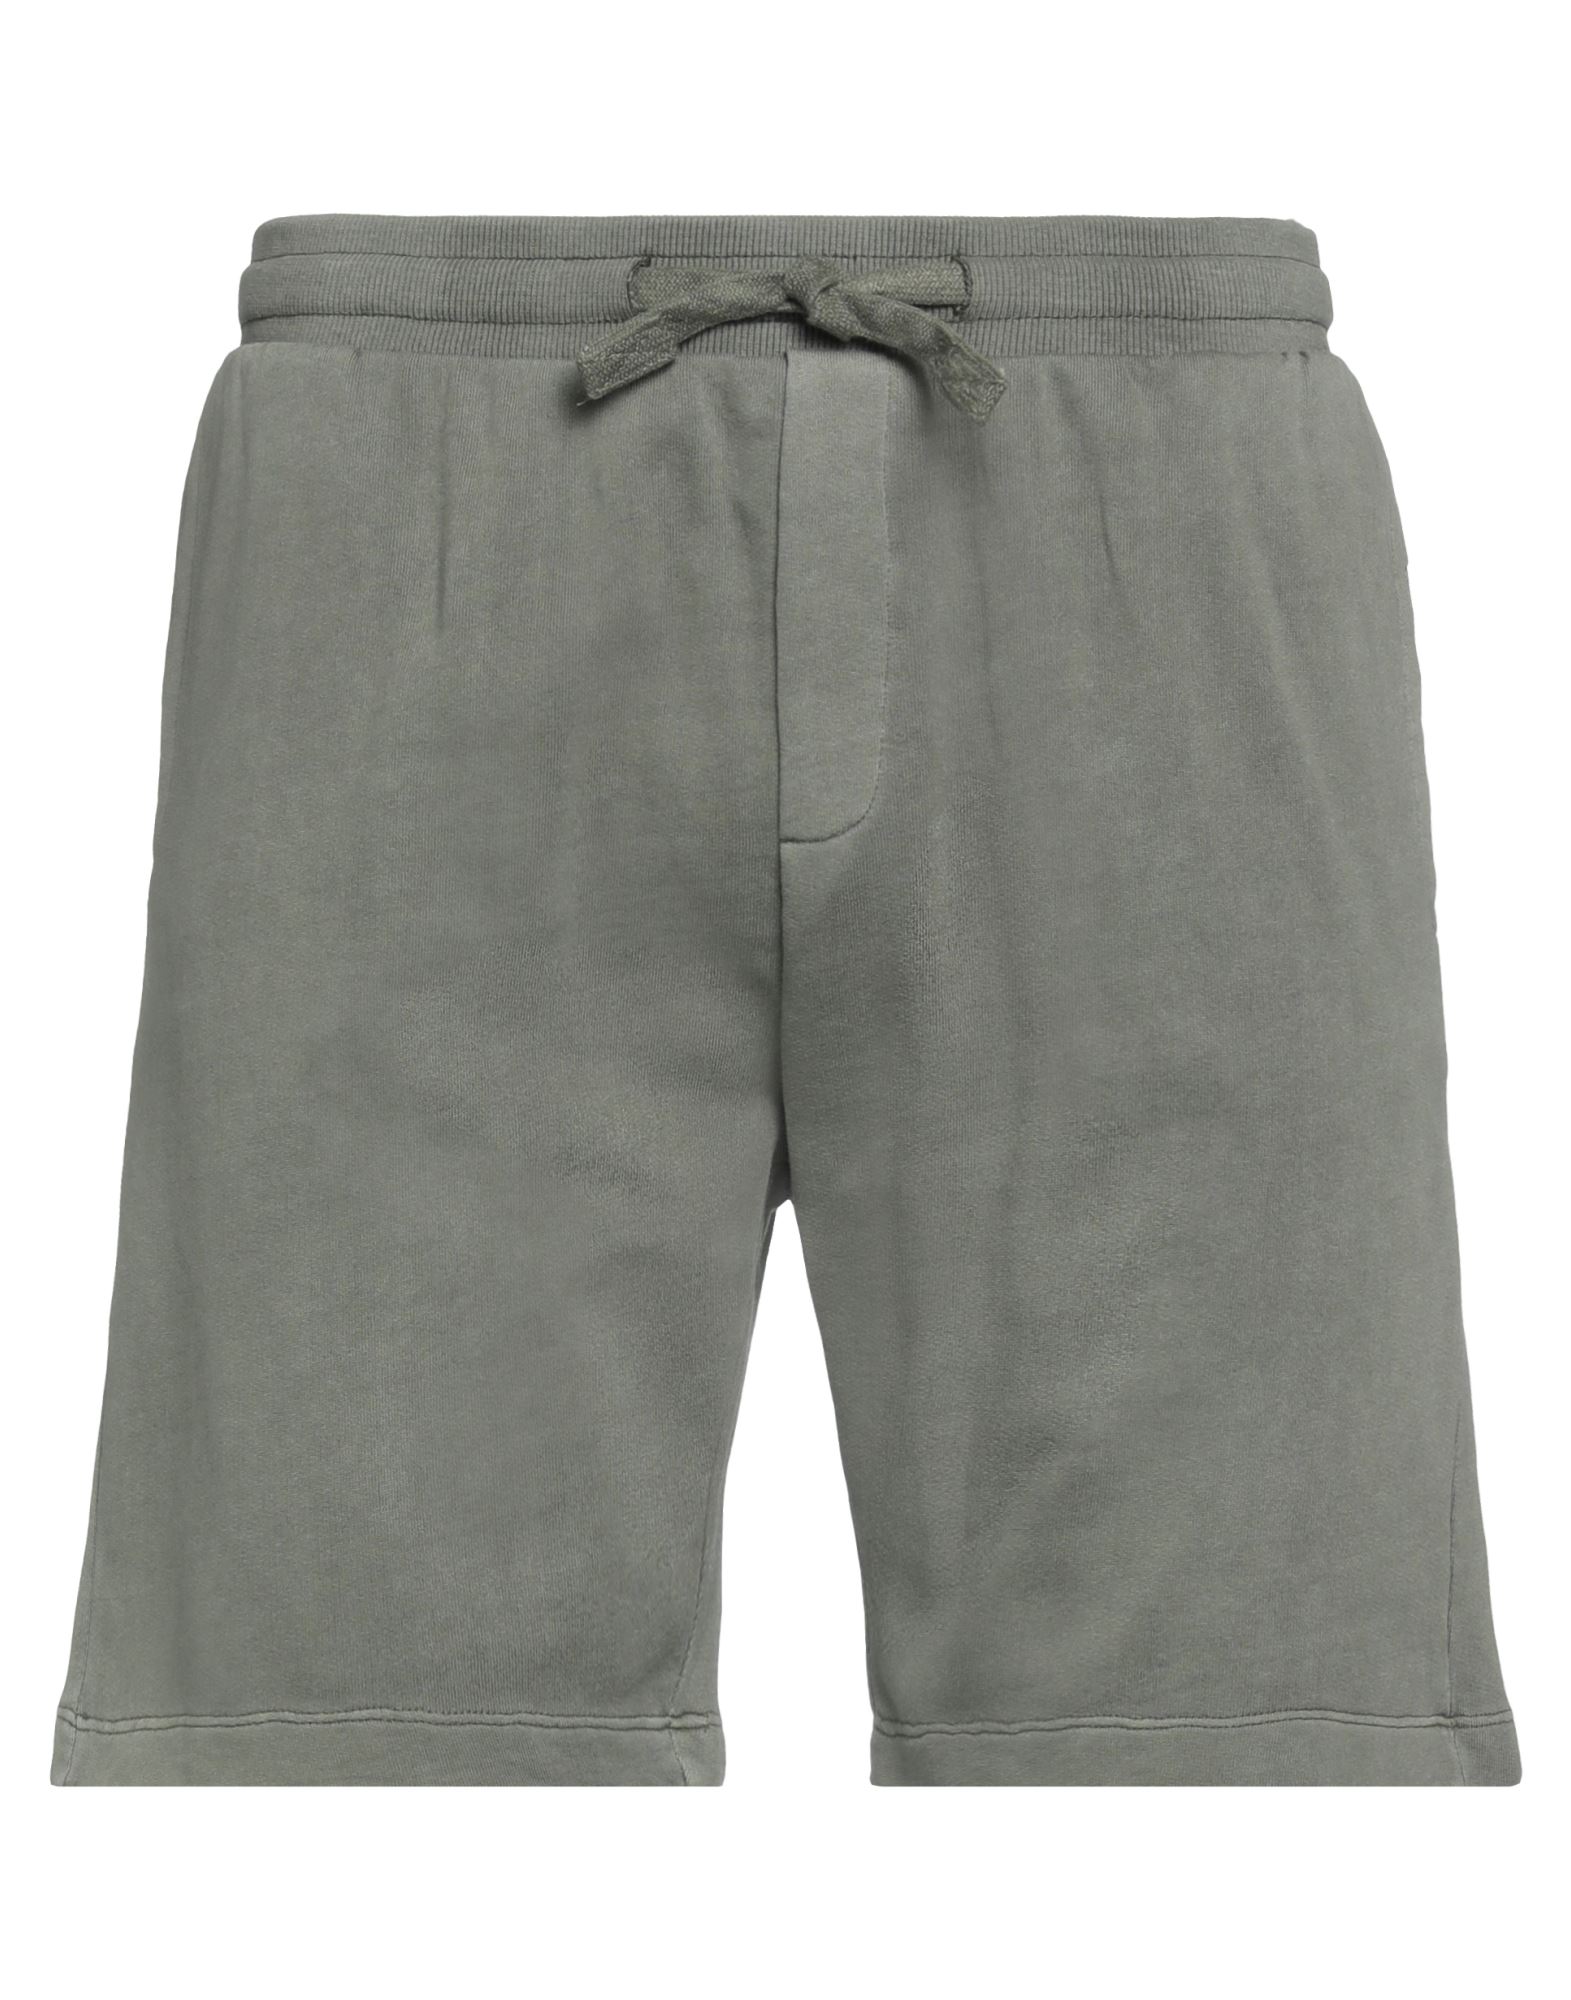 Impure Man Shorts & Bermuda Shorts Military Green Size L Cotton